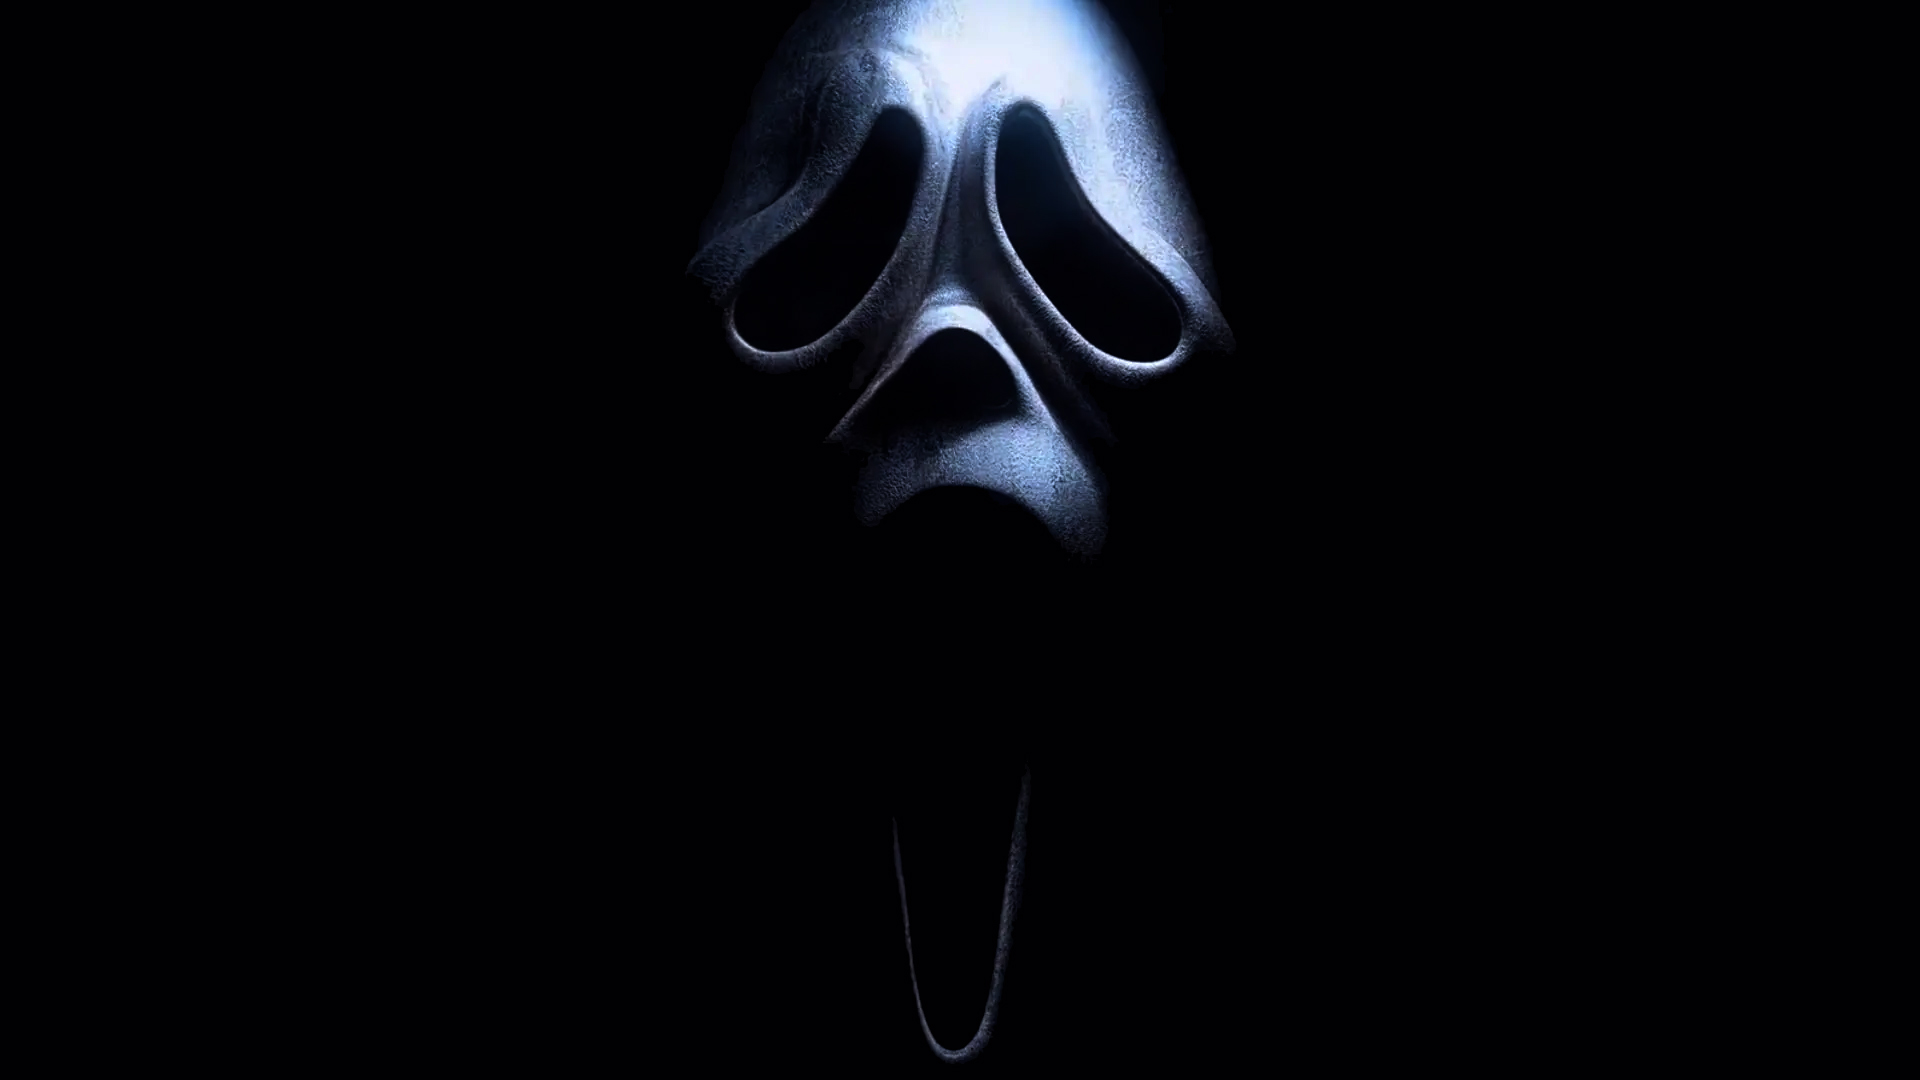 General 1920x1080 Scream black background ghostface horror movies digital art simple background mask low light minimalism